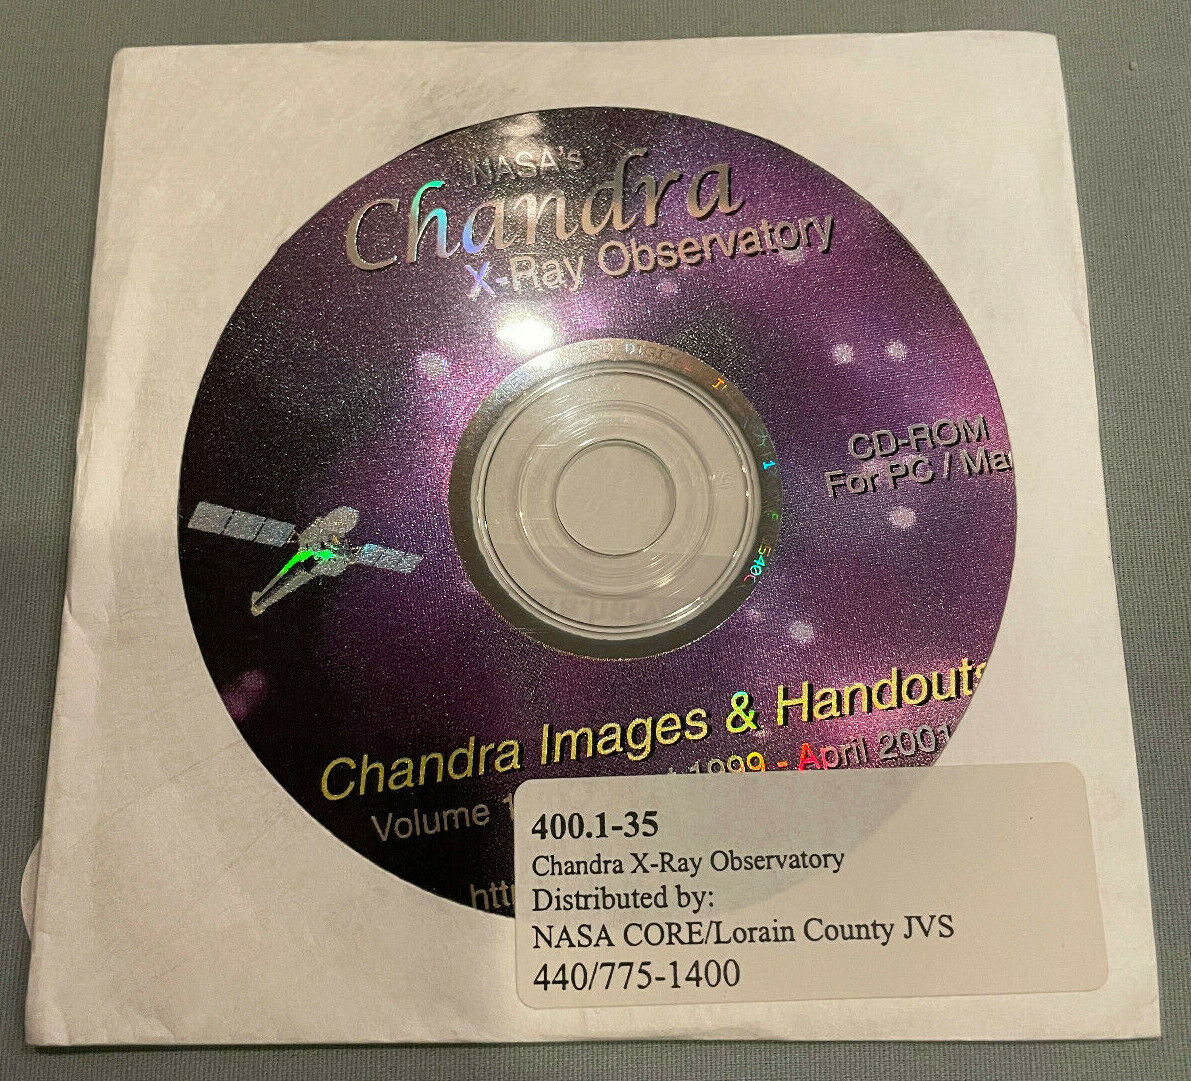 NASA's Chandra X-Ray Observatory Images/Handouts Volume 1 PC/Mac Computer CD